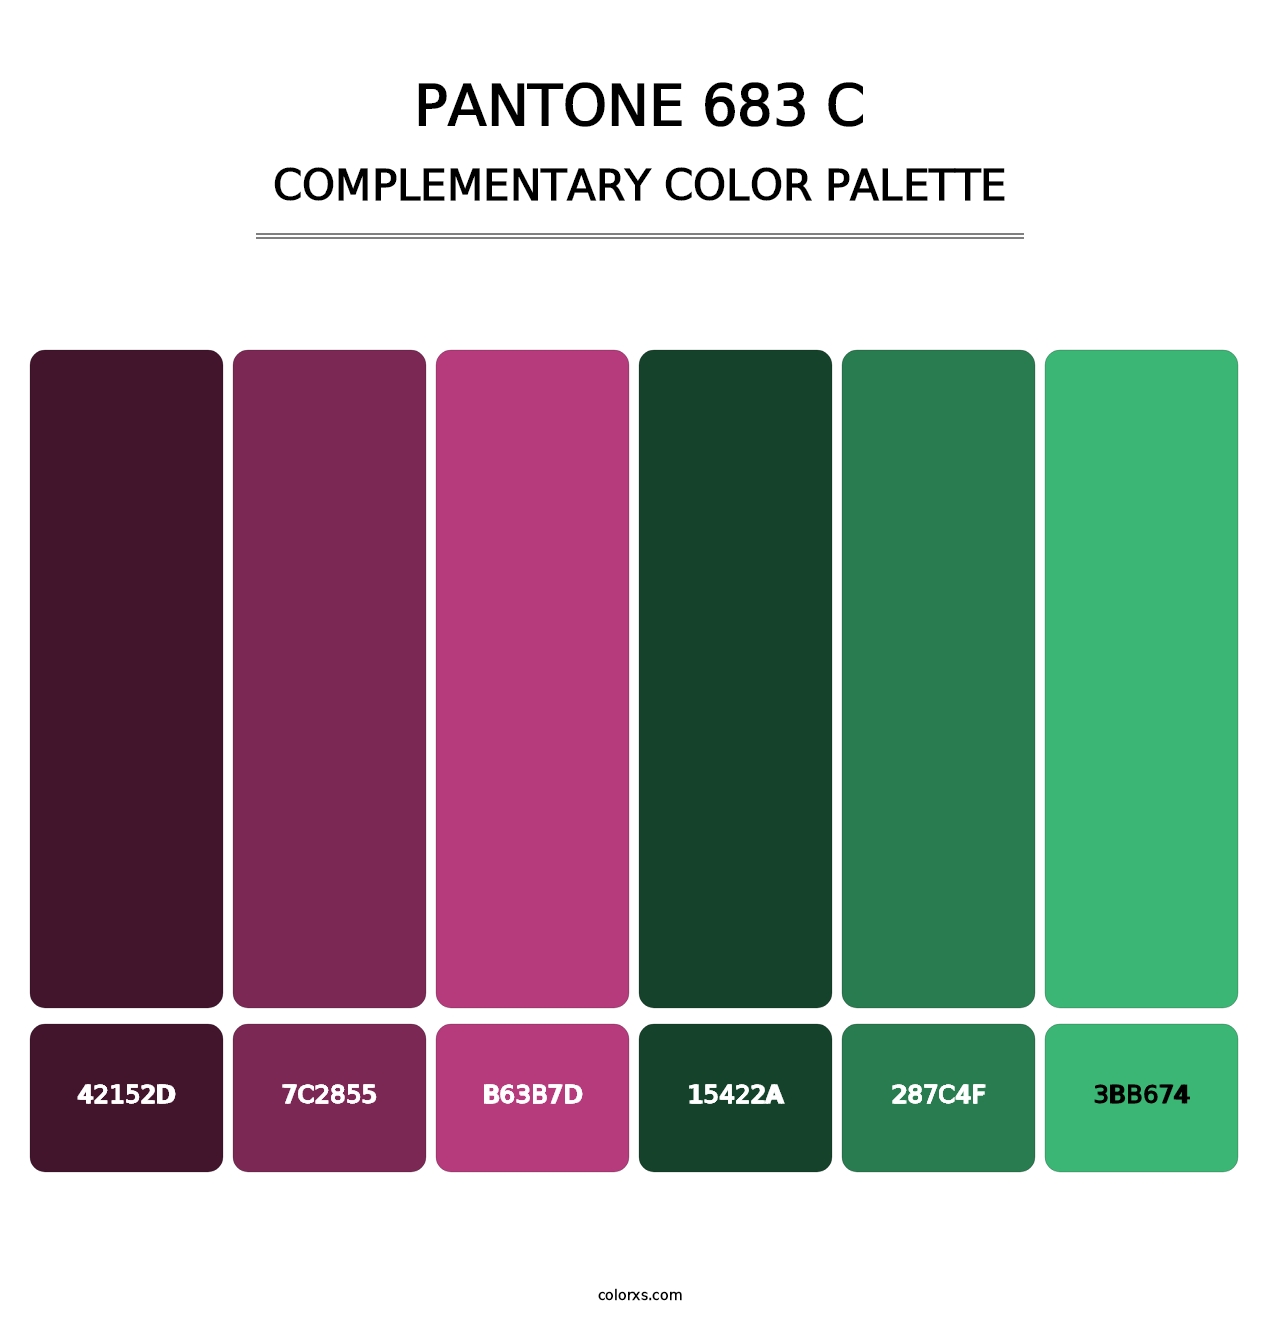 PANTONE 683 C - Complementary Color Palette